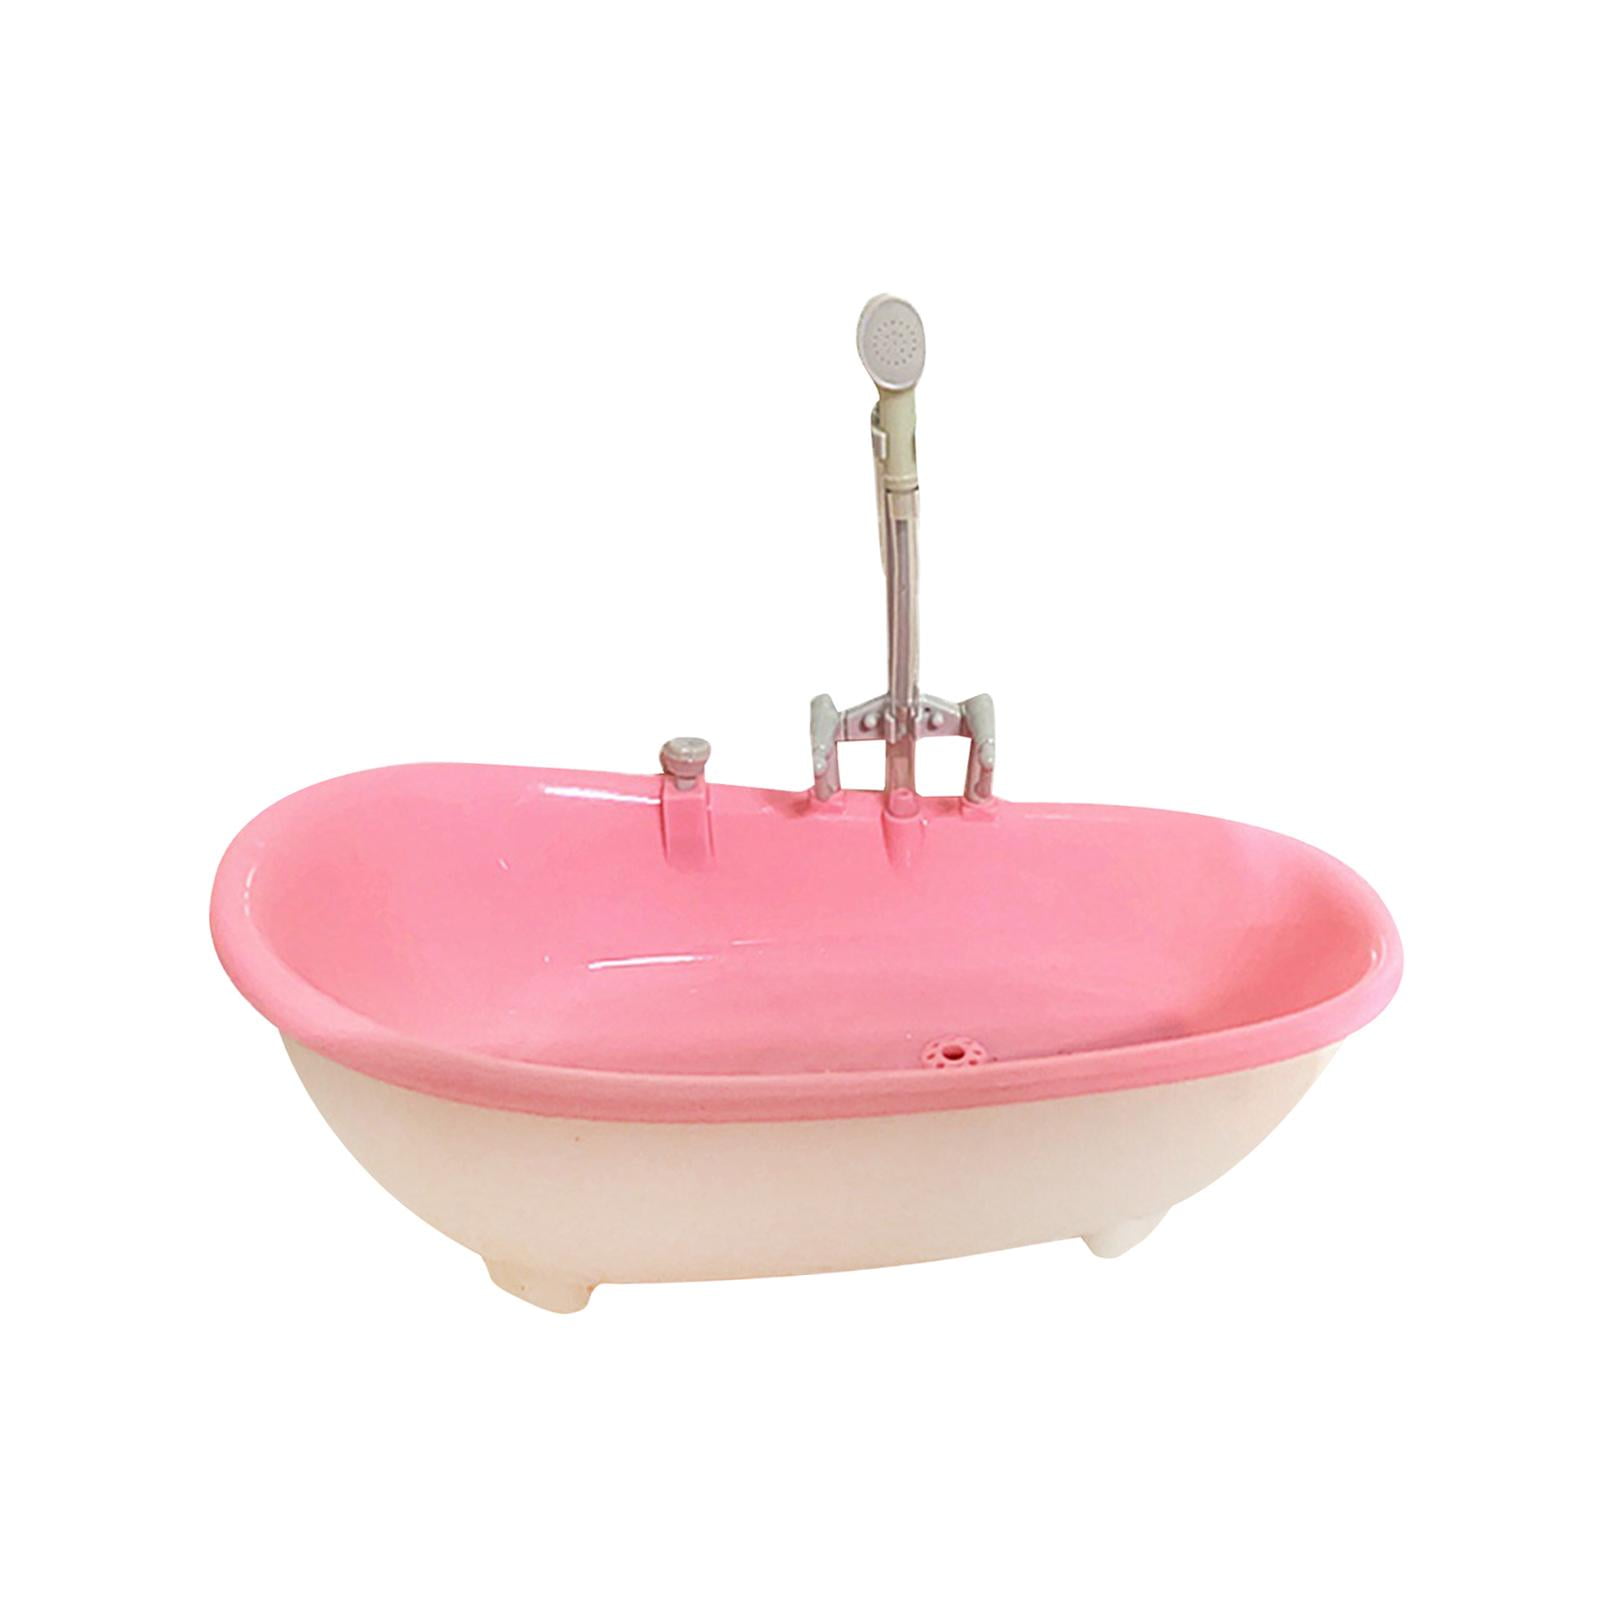 Premium AI Image  Dollhouse bathroom with clawfoot tub and tiny